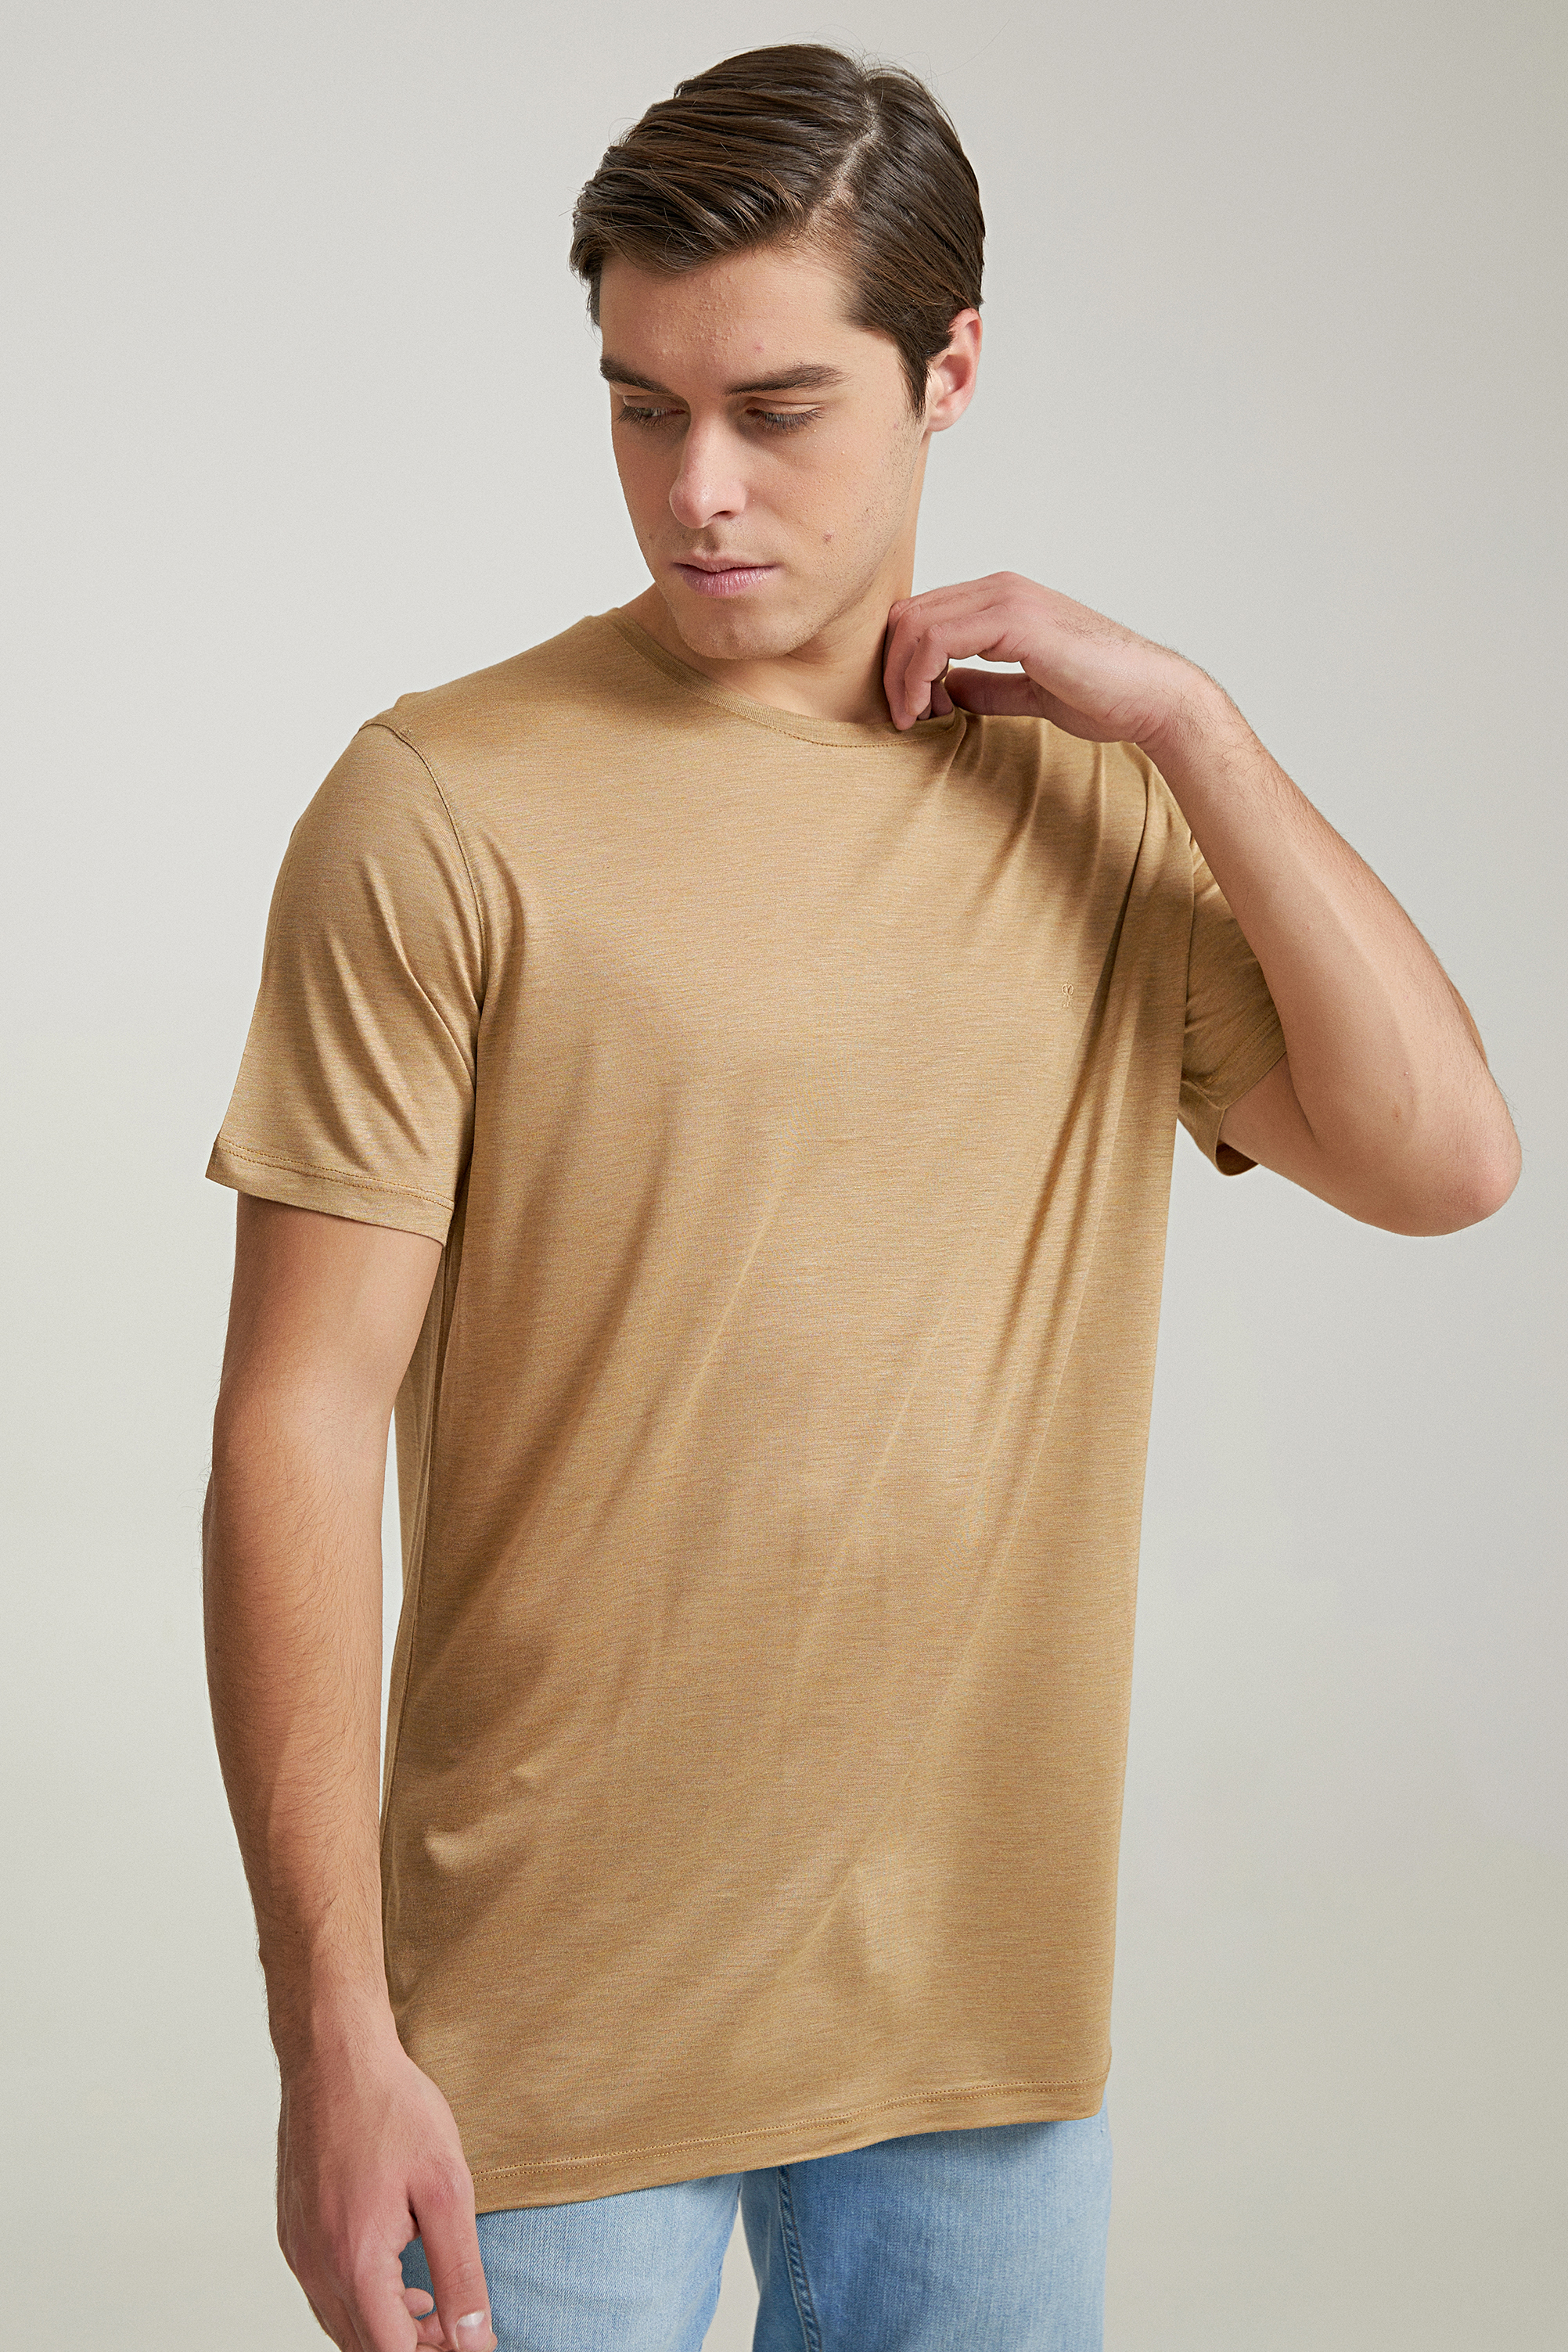 Damat Tween Damat Camel T-Shirt. 2